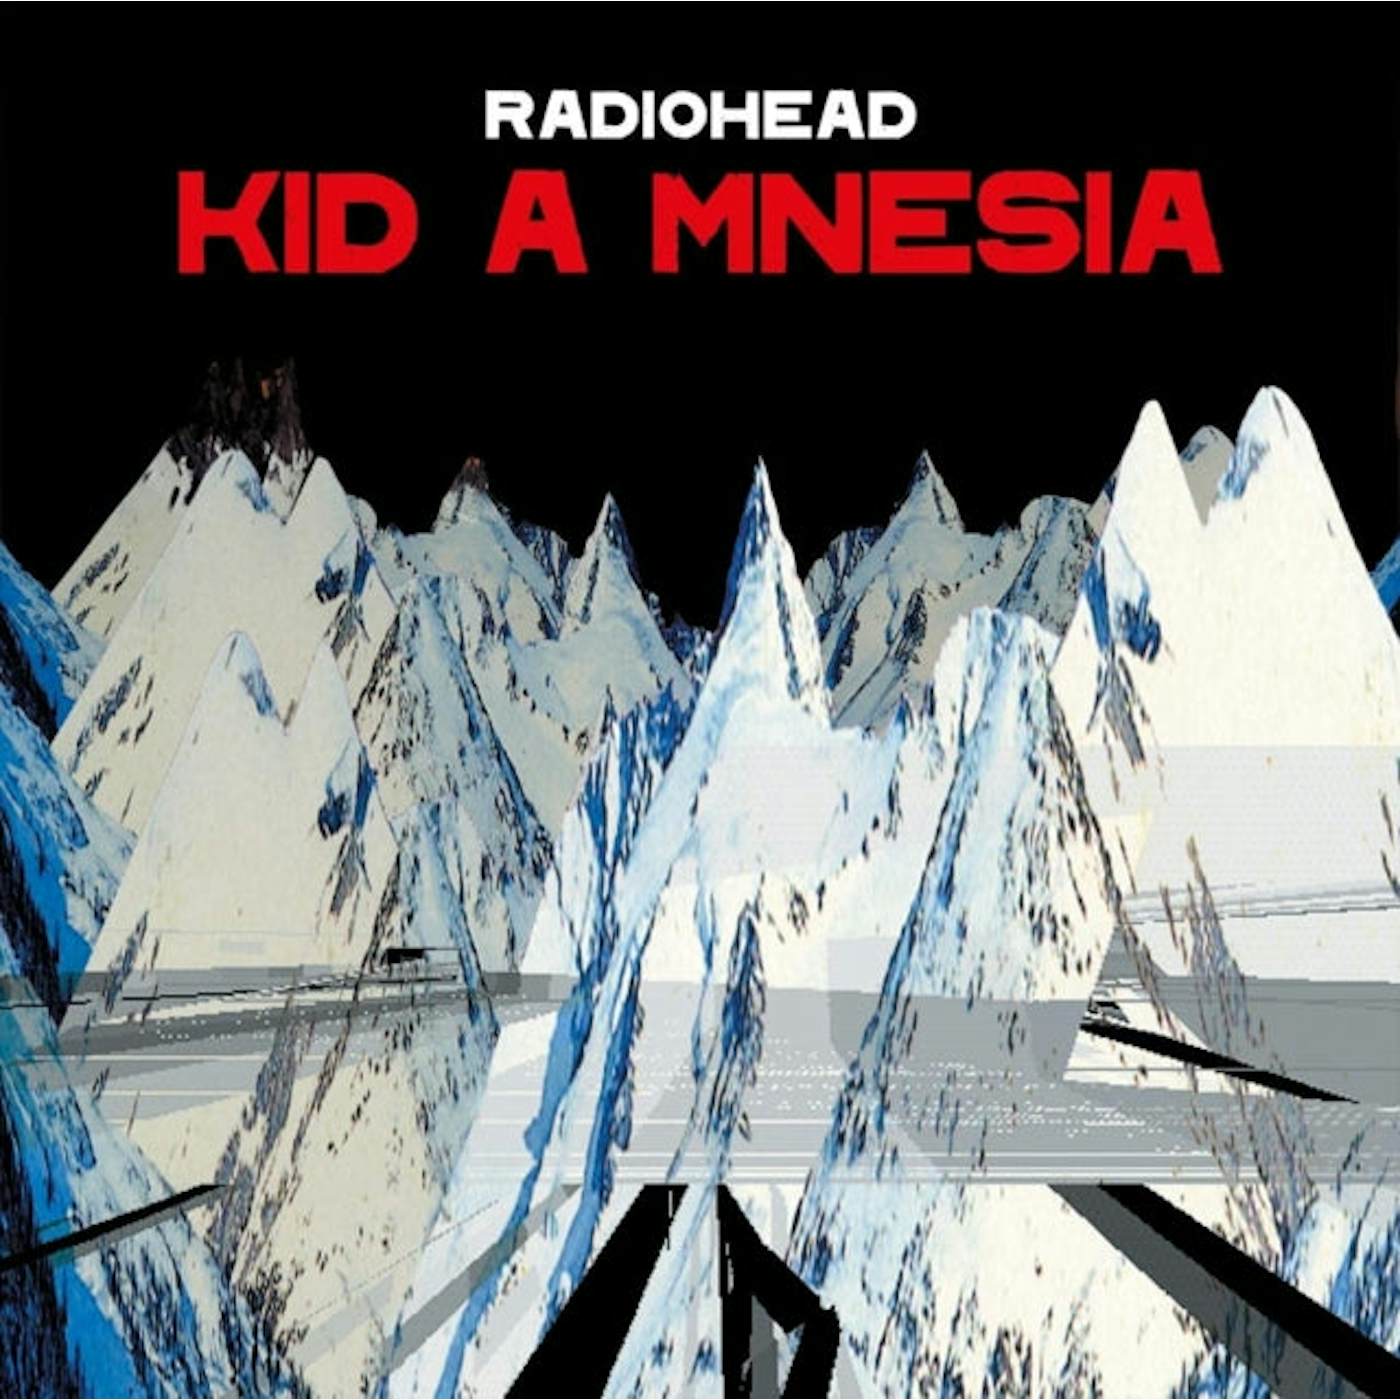 Radiohead LP Vinyl Record - Kid A Mnesia